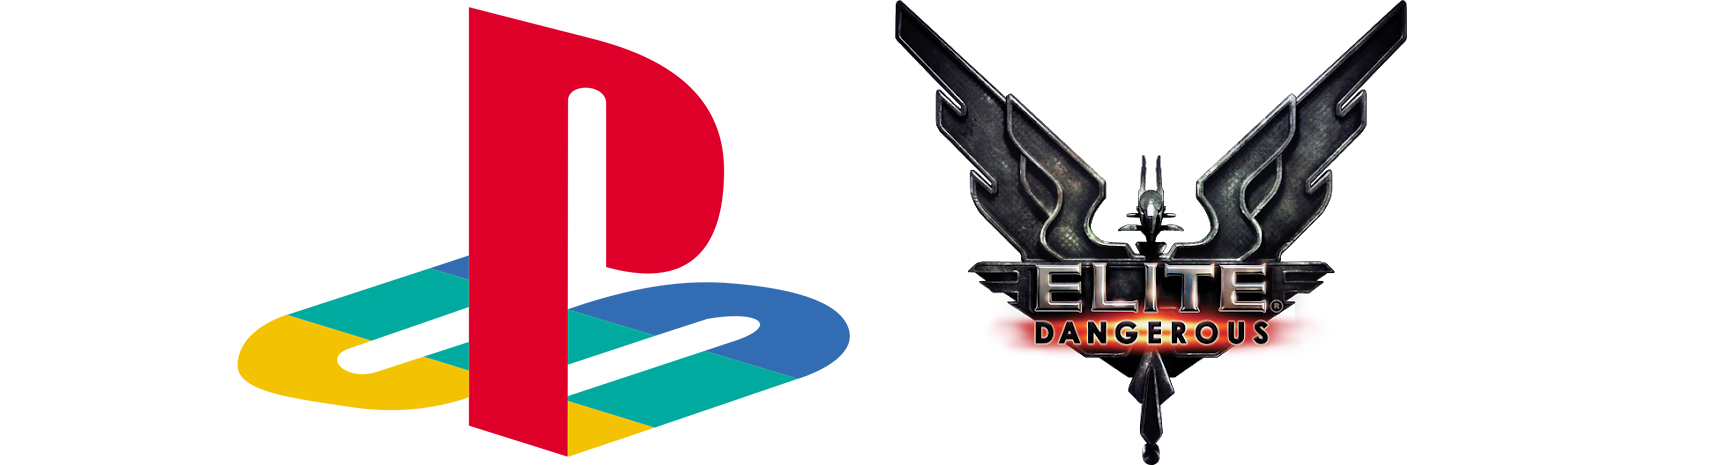 Elite-Deangerous-Playstation-Flota-Union-Cosmos-Logo.png